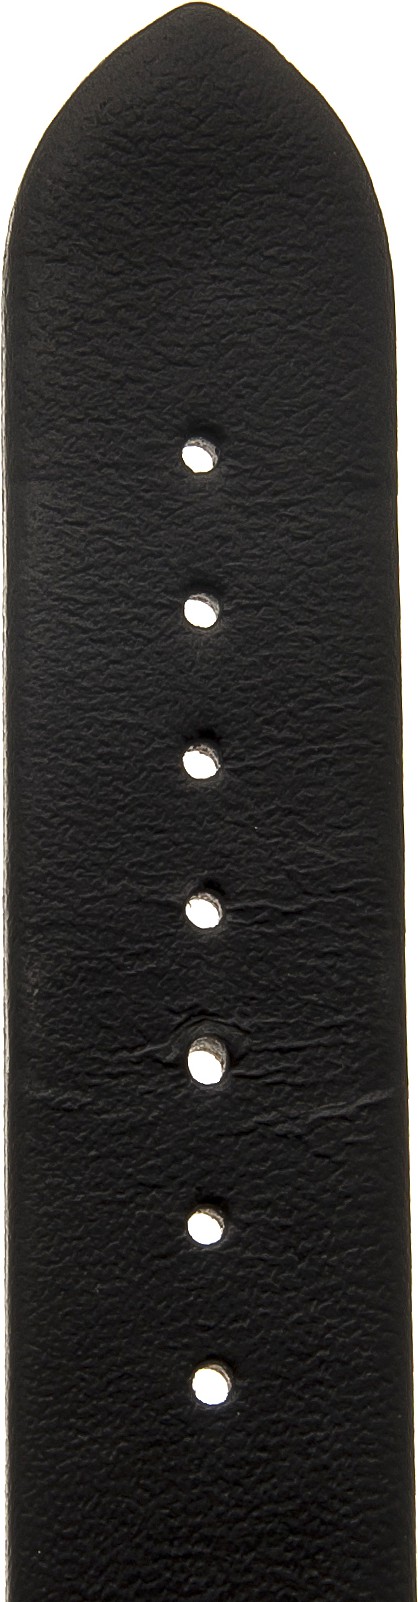   Uhrenarmband passend für Skagen Uhren Kippfaltschließe - Leder, glatt - schwarz ohne Naht 